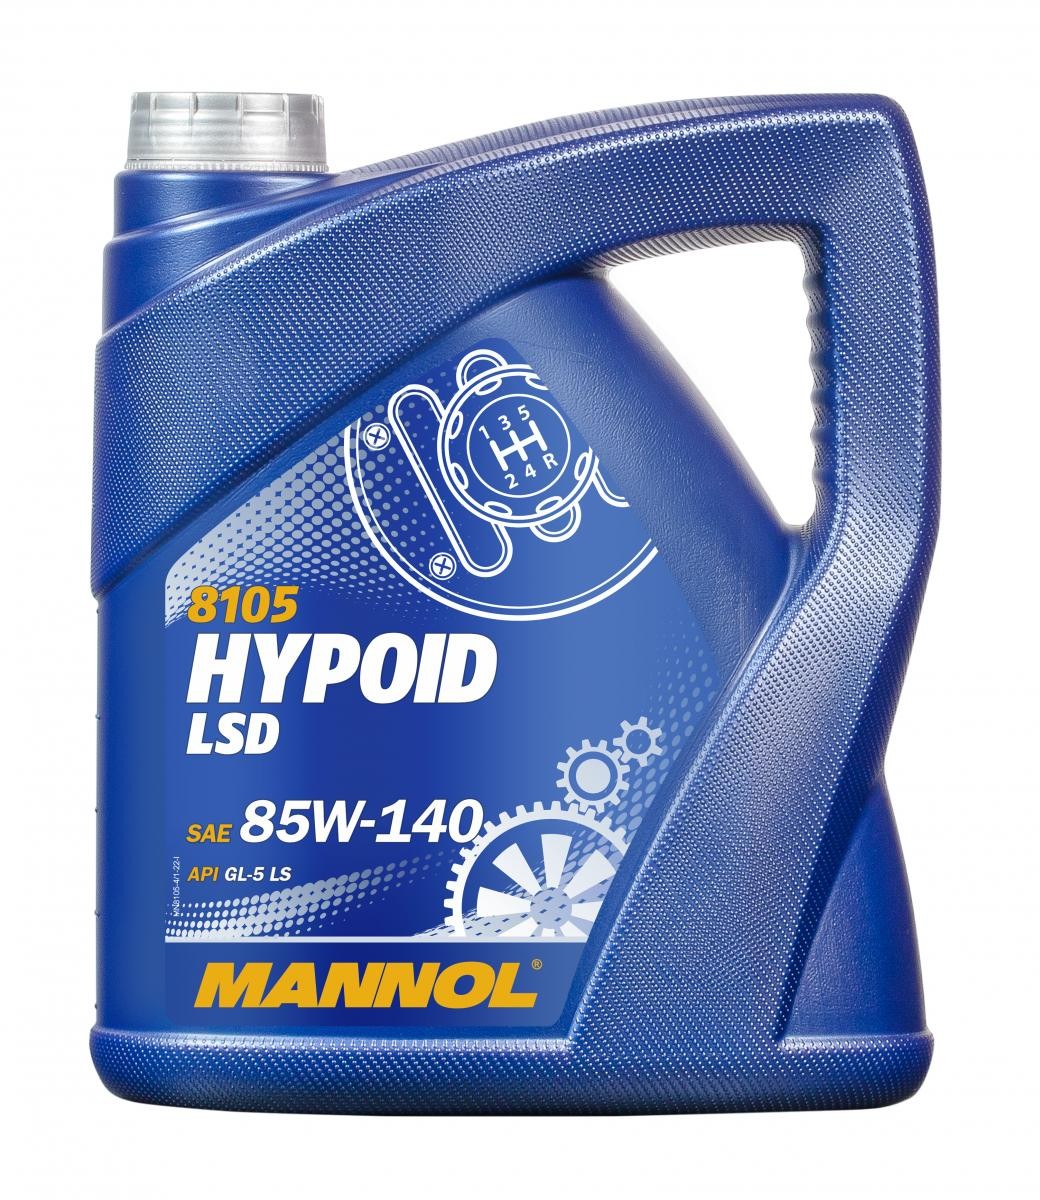 MANNOL HYPOID LSD 85W-140, Mineral Oil, Capacity: 4l MIL-L 2105 D Transmission oil MN8105-4 buy